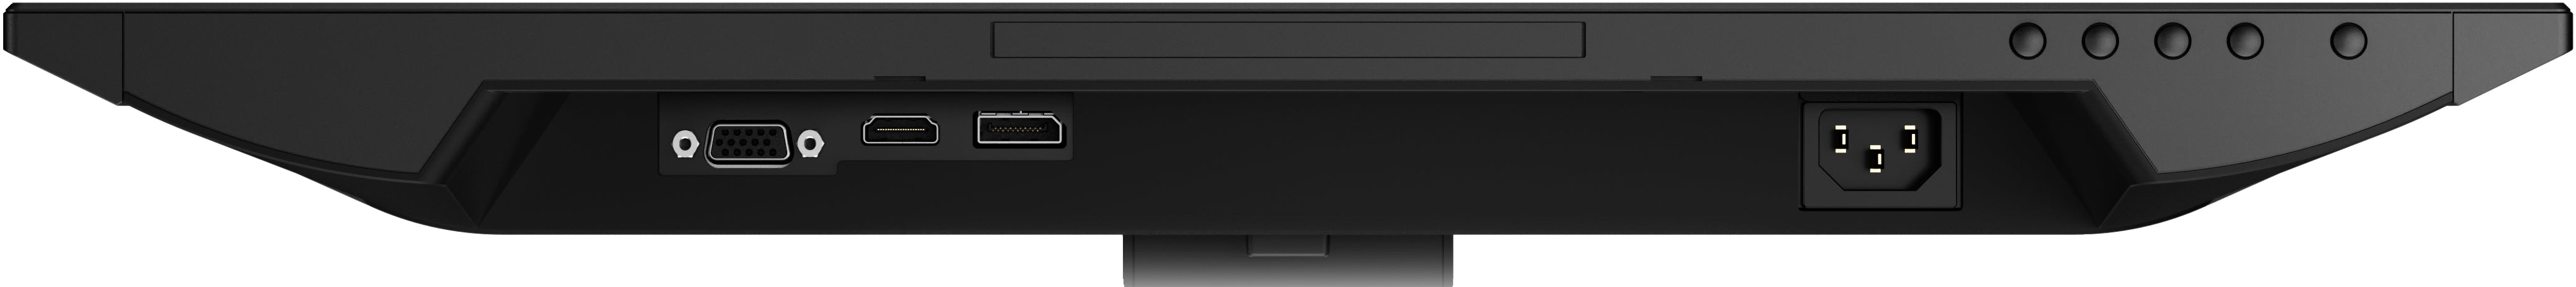 HP P22h G4, 54.6 cm (21.5"), 1920 x 1080 pixels, Full HD, LCD, 5 ms